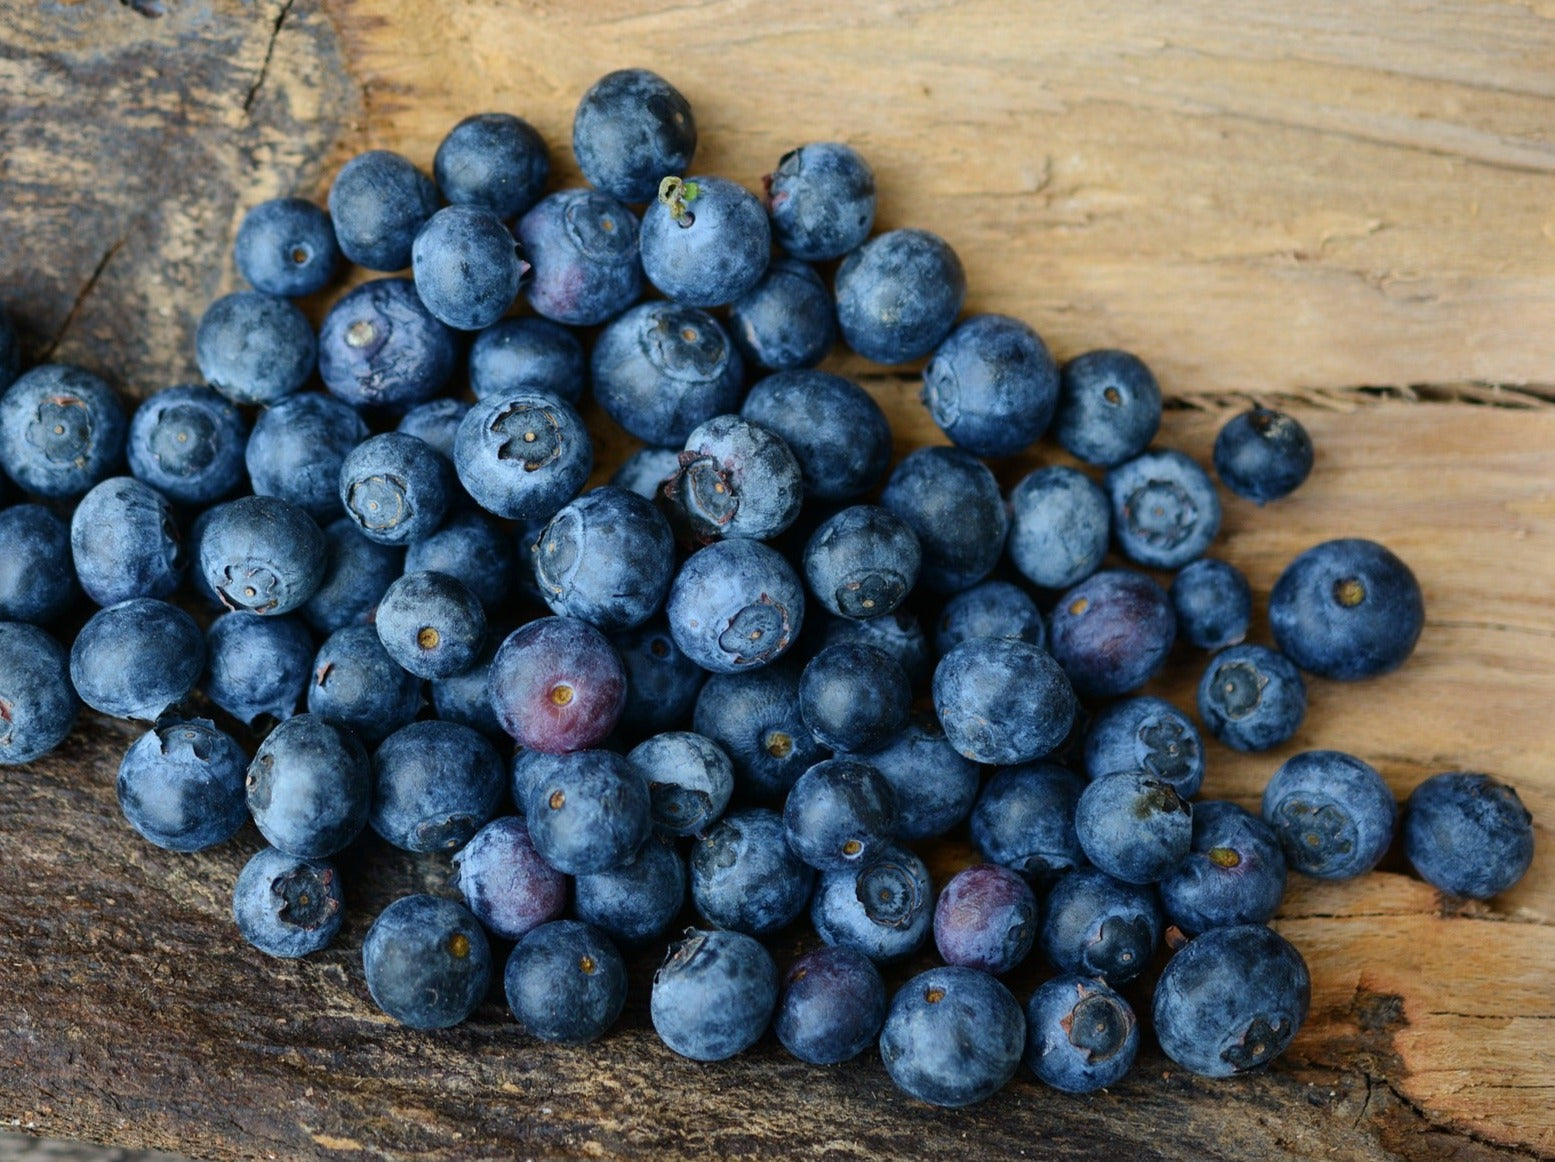 SHARING NZ Organic Blueberries from last week